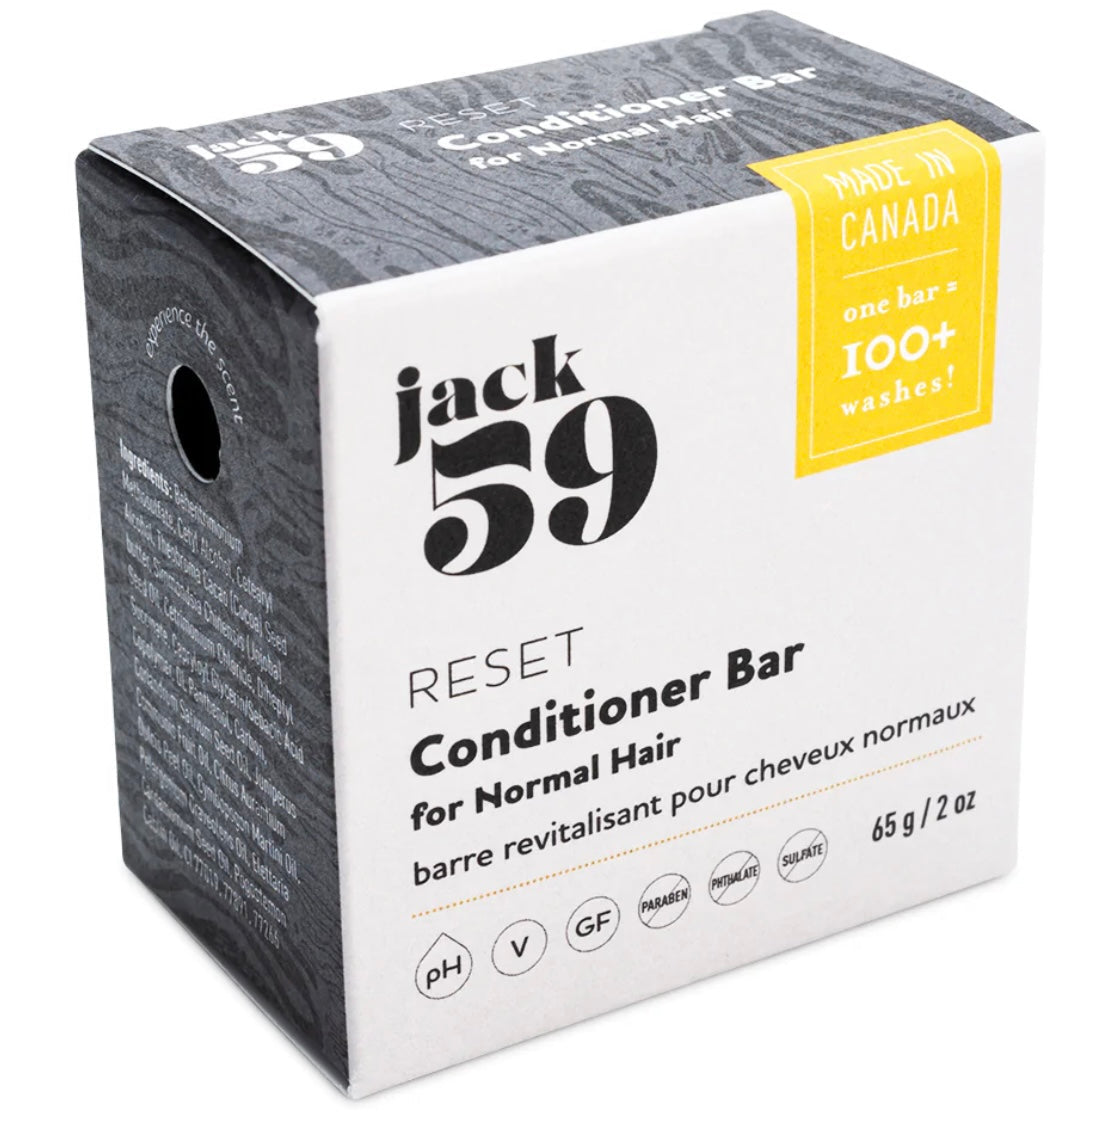 Jack59 Shampoo Bar